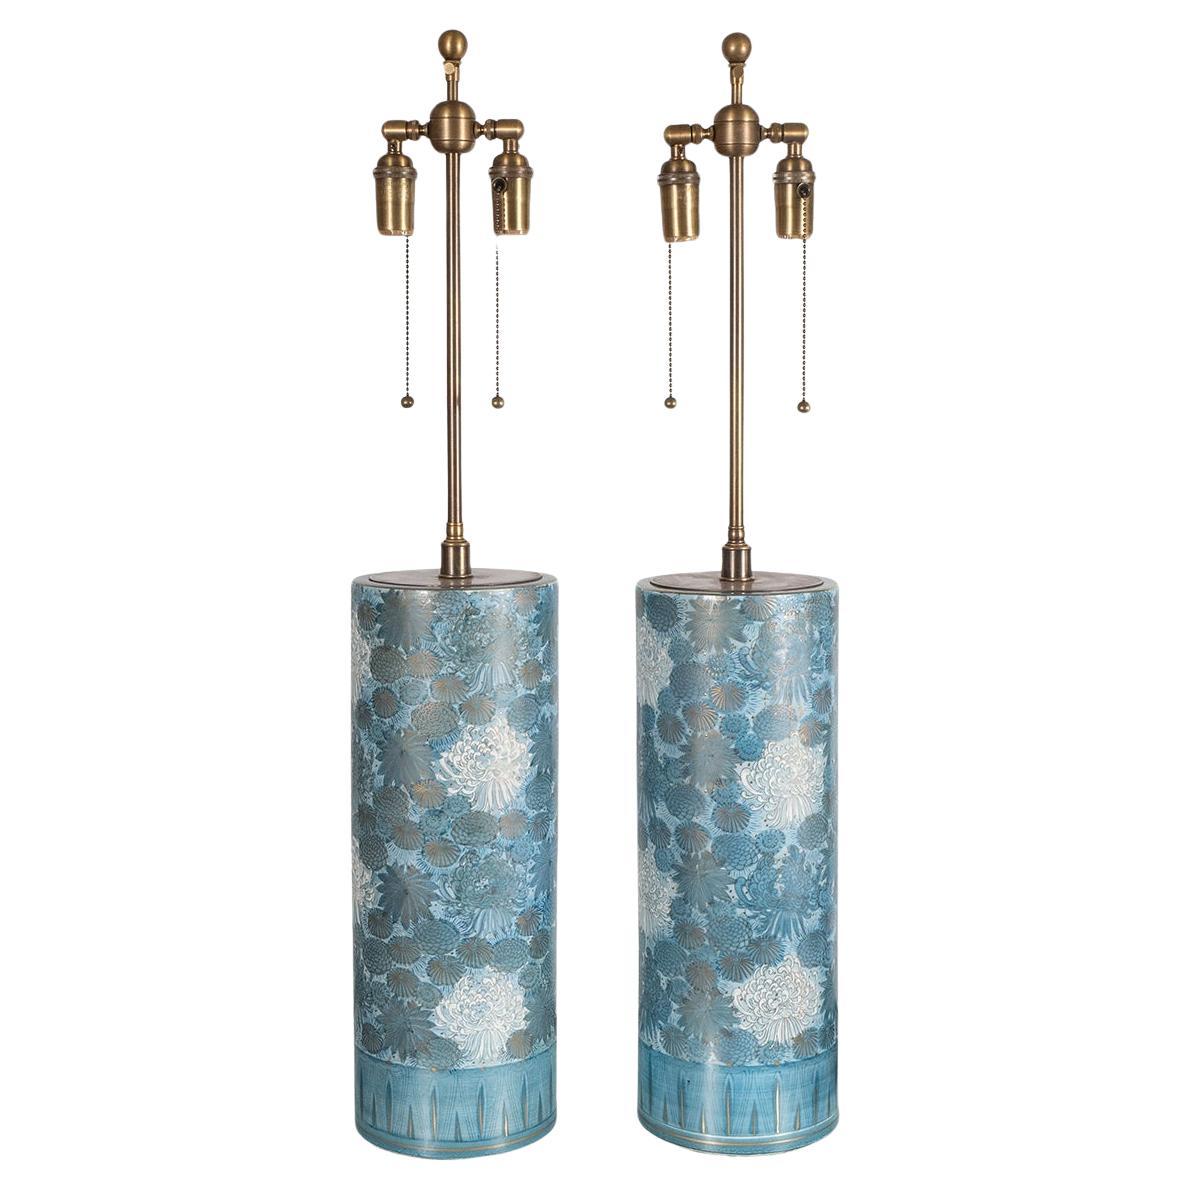 Pair of Japanese Flower Motif Ceramic Table Lamps